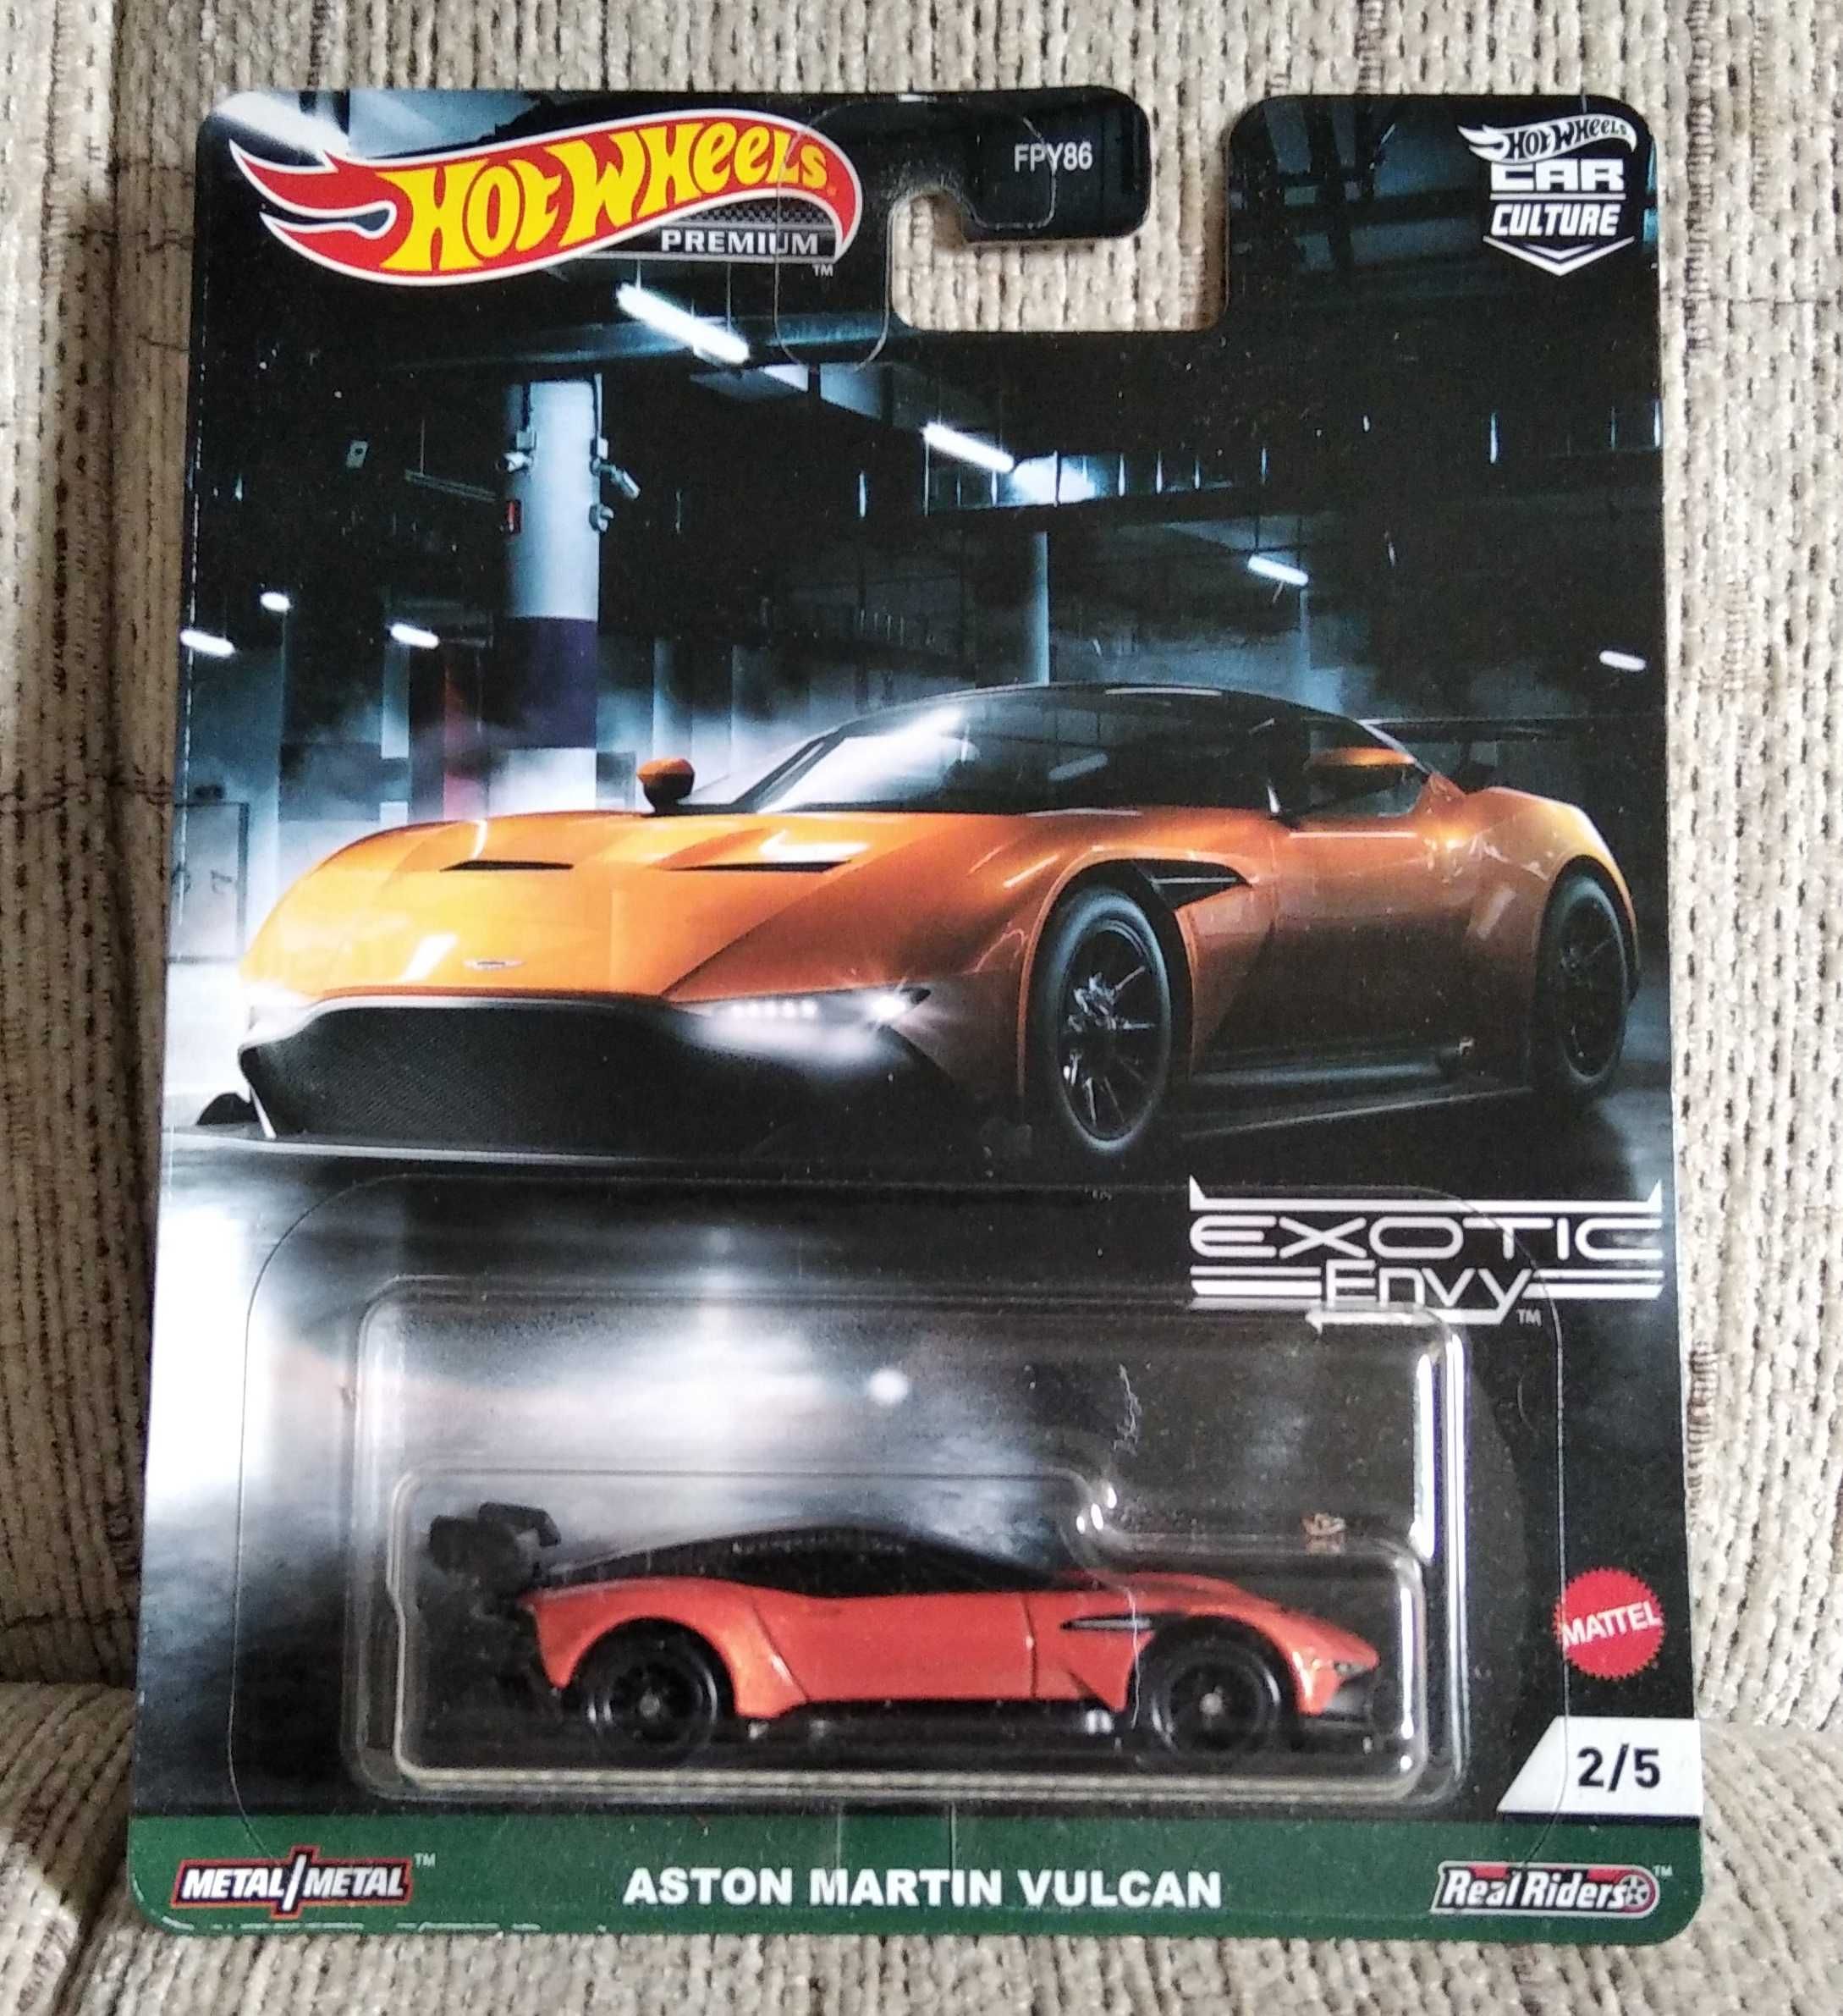 Hot Wheels Premium - Exotic Envy - Aston Martin Vulcan